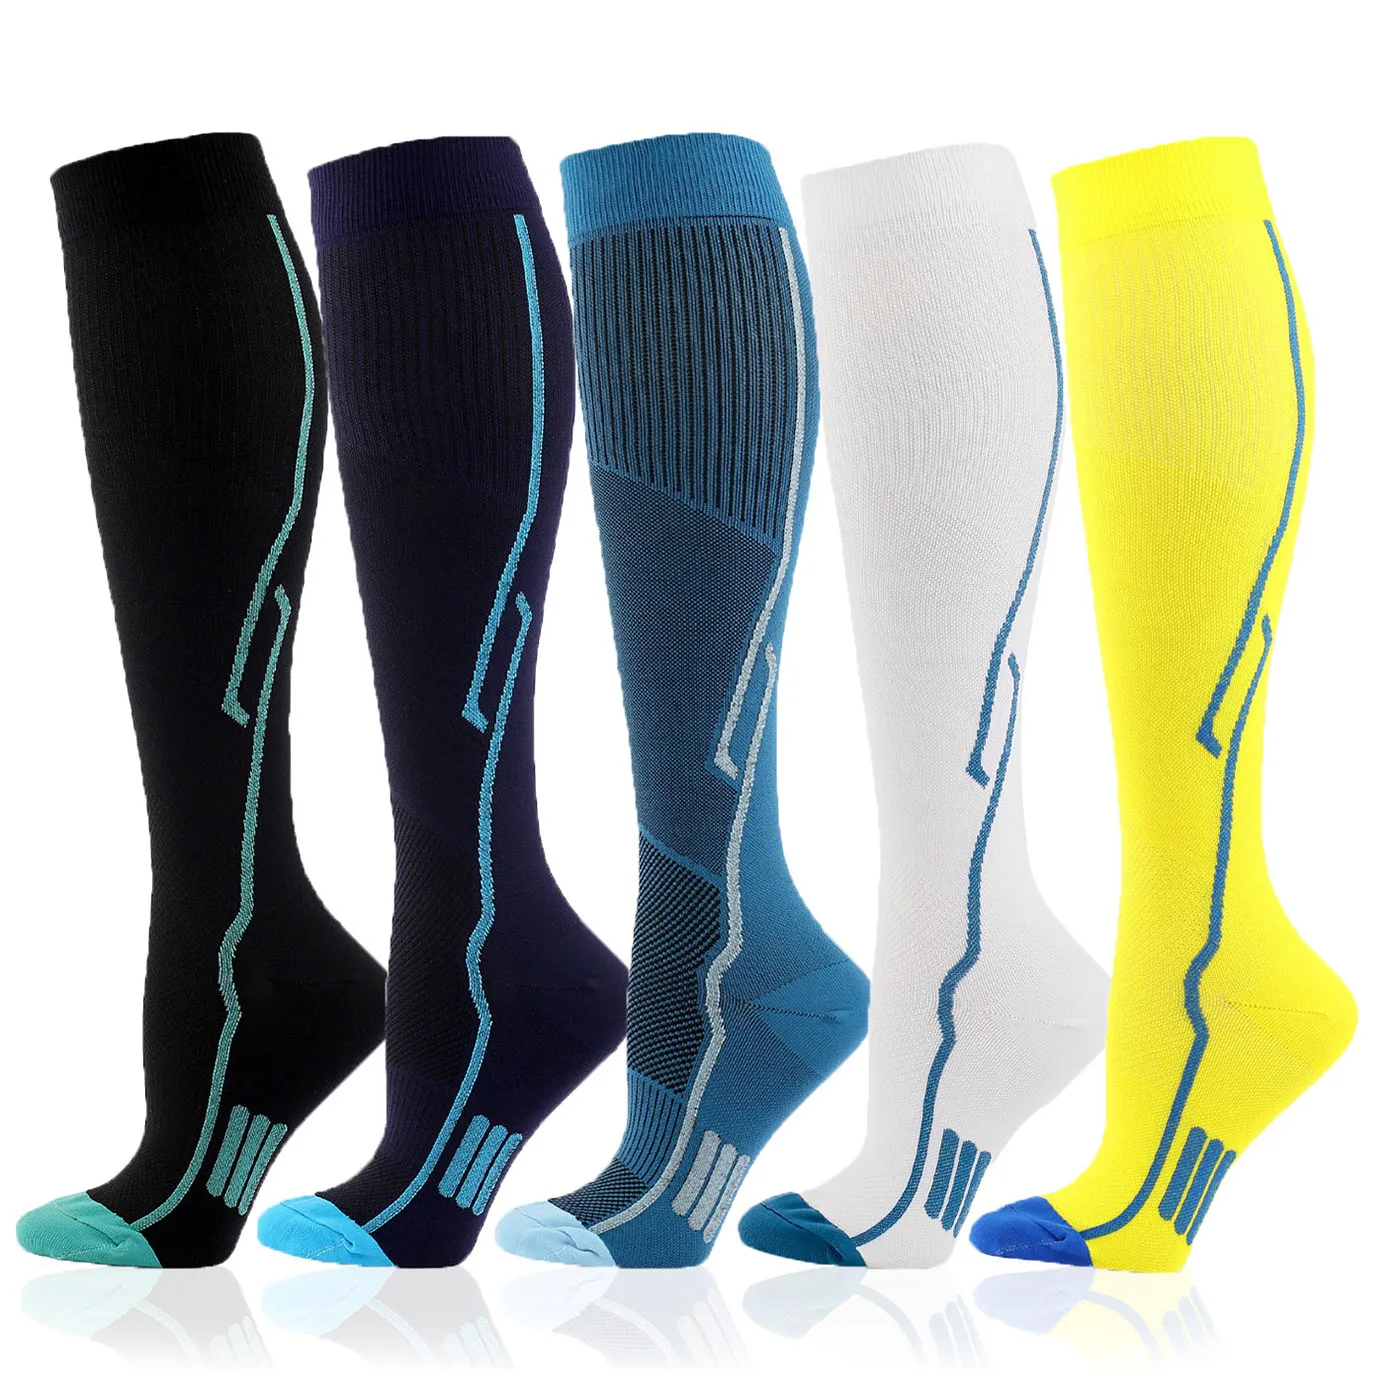 

TANABATA 1 Pair New Nursing Compression Stockings for Women Original Design Nylon Crossfit Soccer Men's Socks Free Shipping